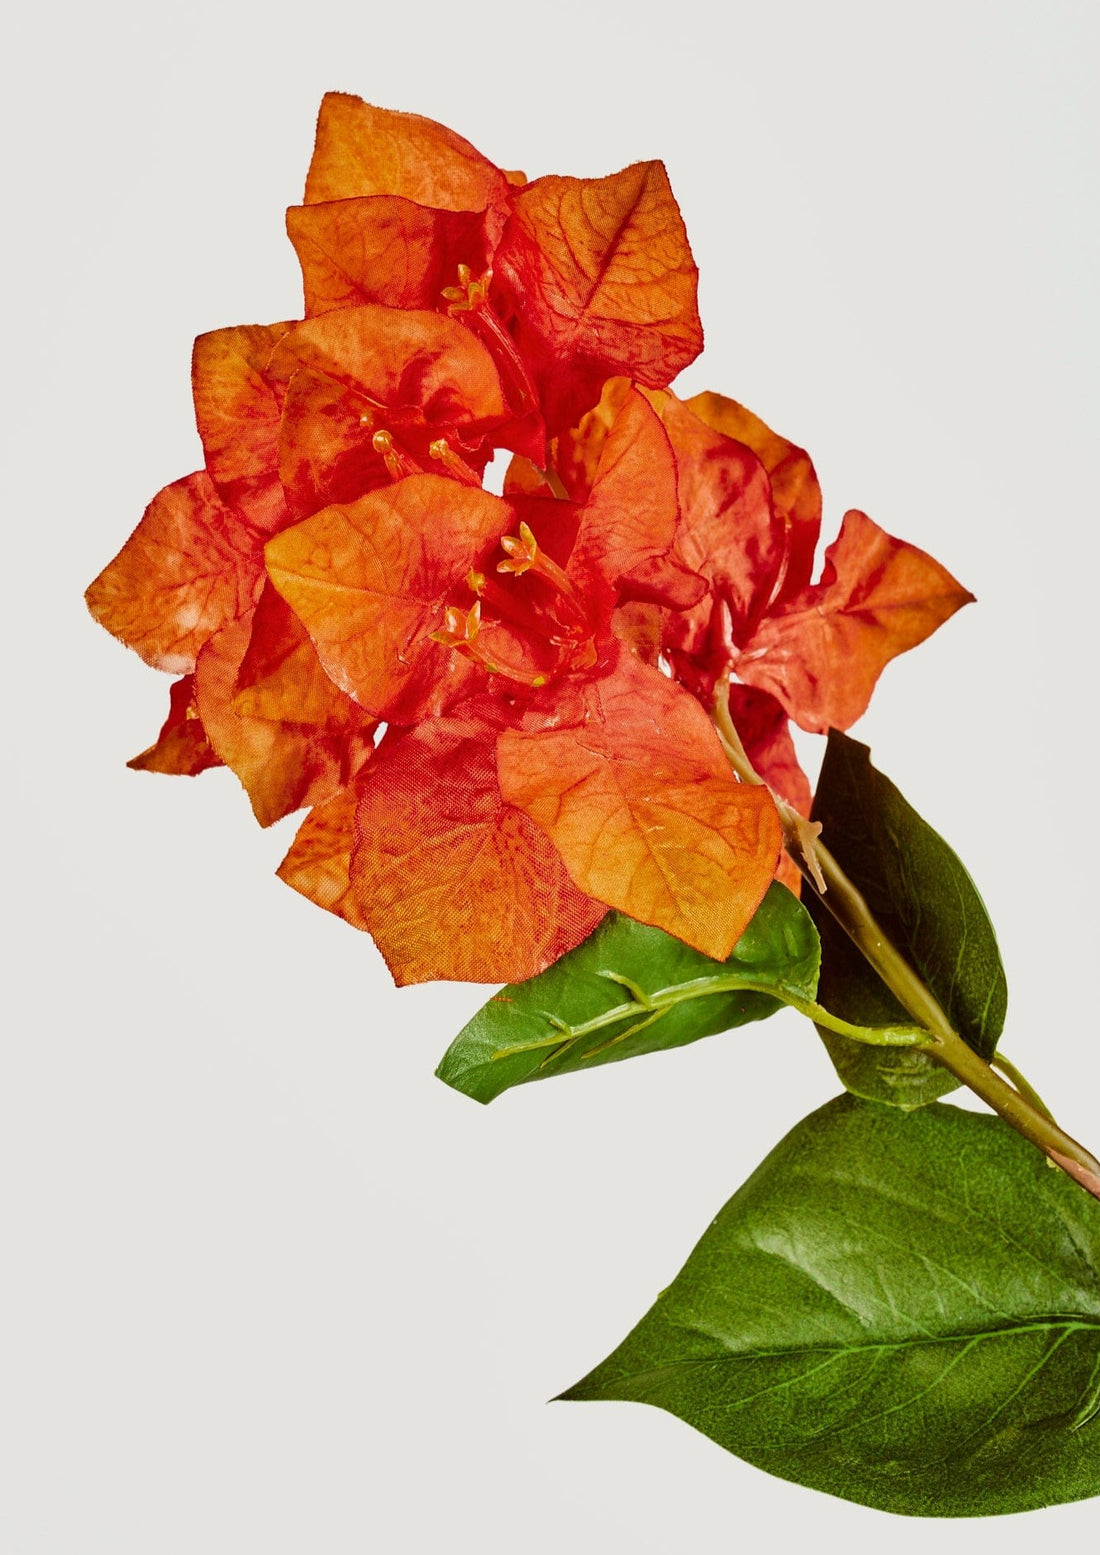 Orange Faux Bougainvillea Flower in Afloral Closeup View